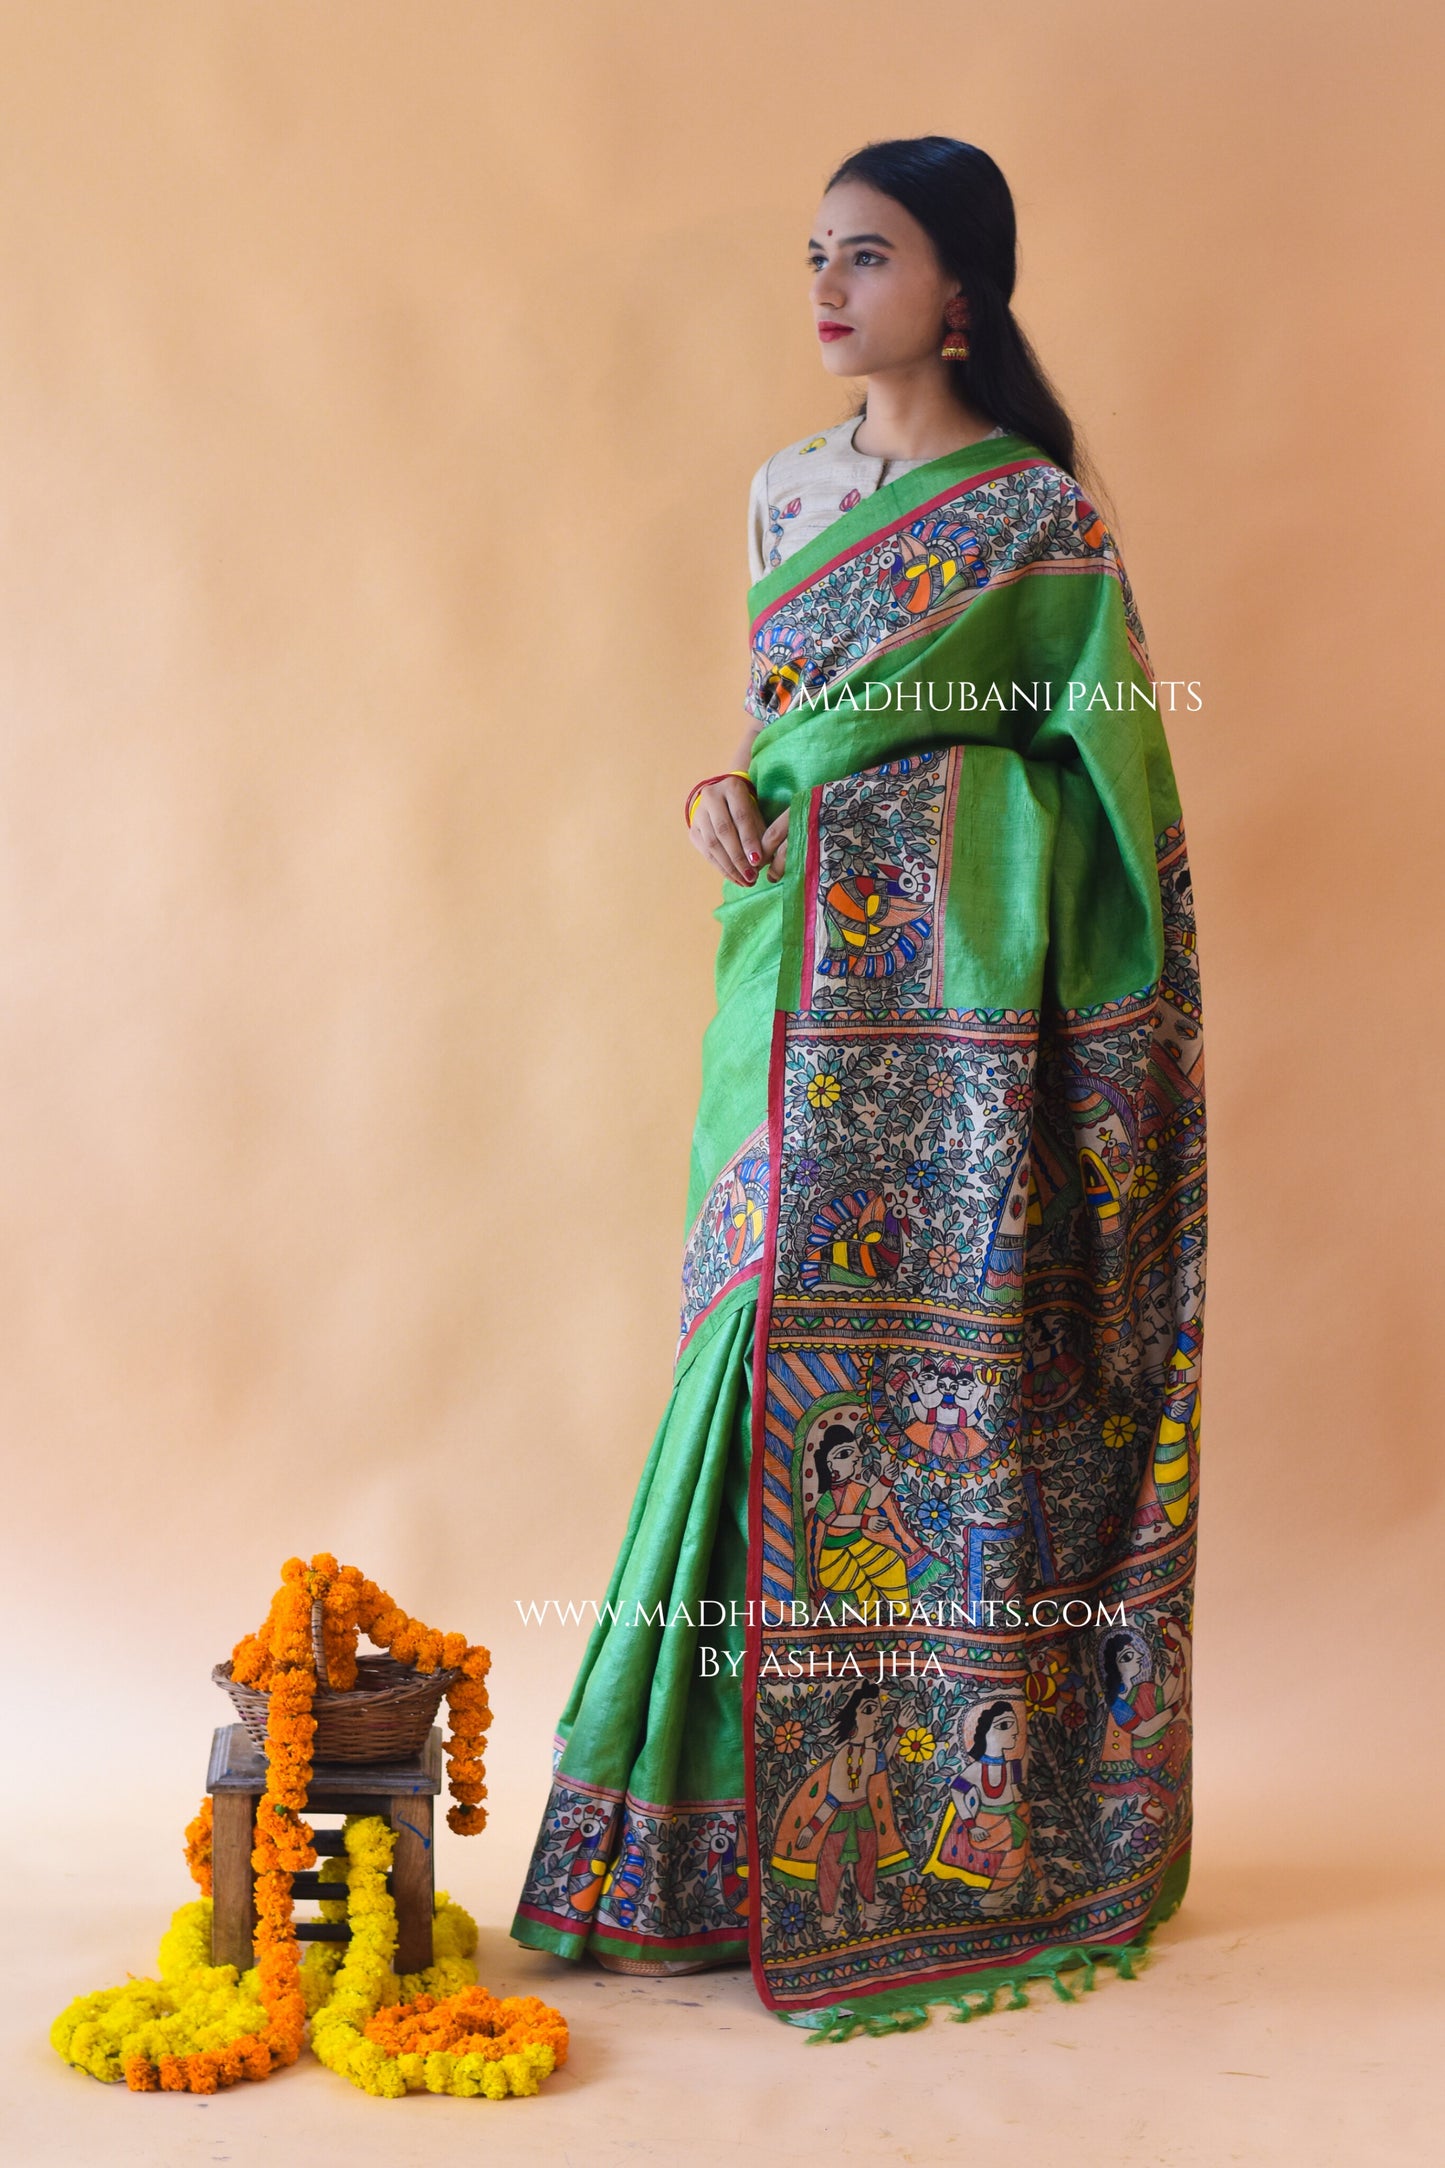 "Hariyali Ramayan" Hand-painted Madhubani Tussar Silk Saree Blouse Set